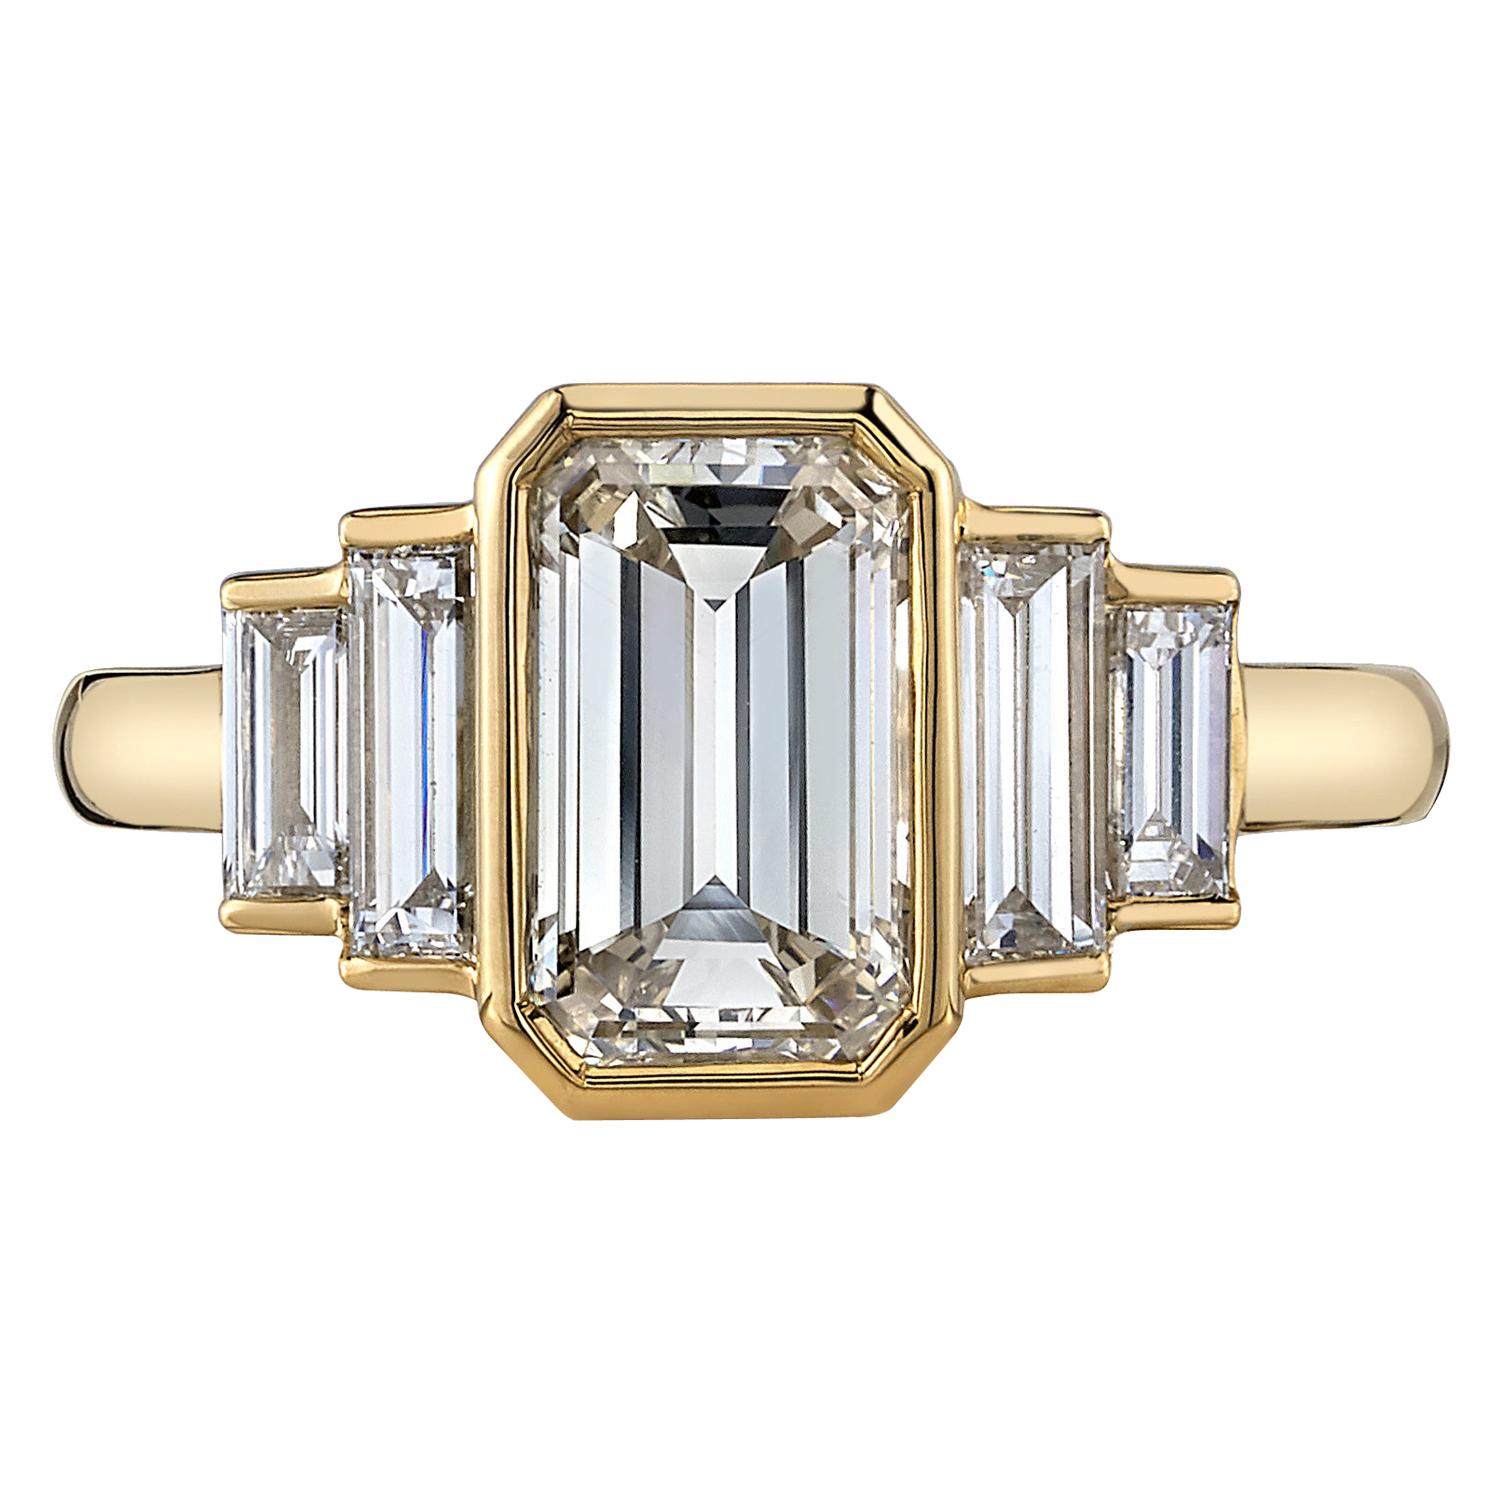 1.74 Carat Emerald Cut Diamond Set in a Handcrafted 18 Karat Gold Ring